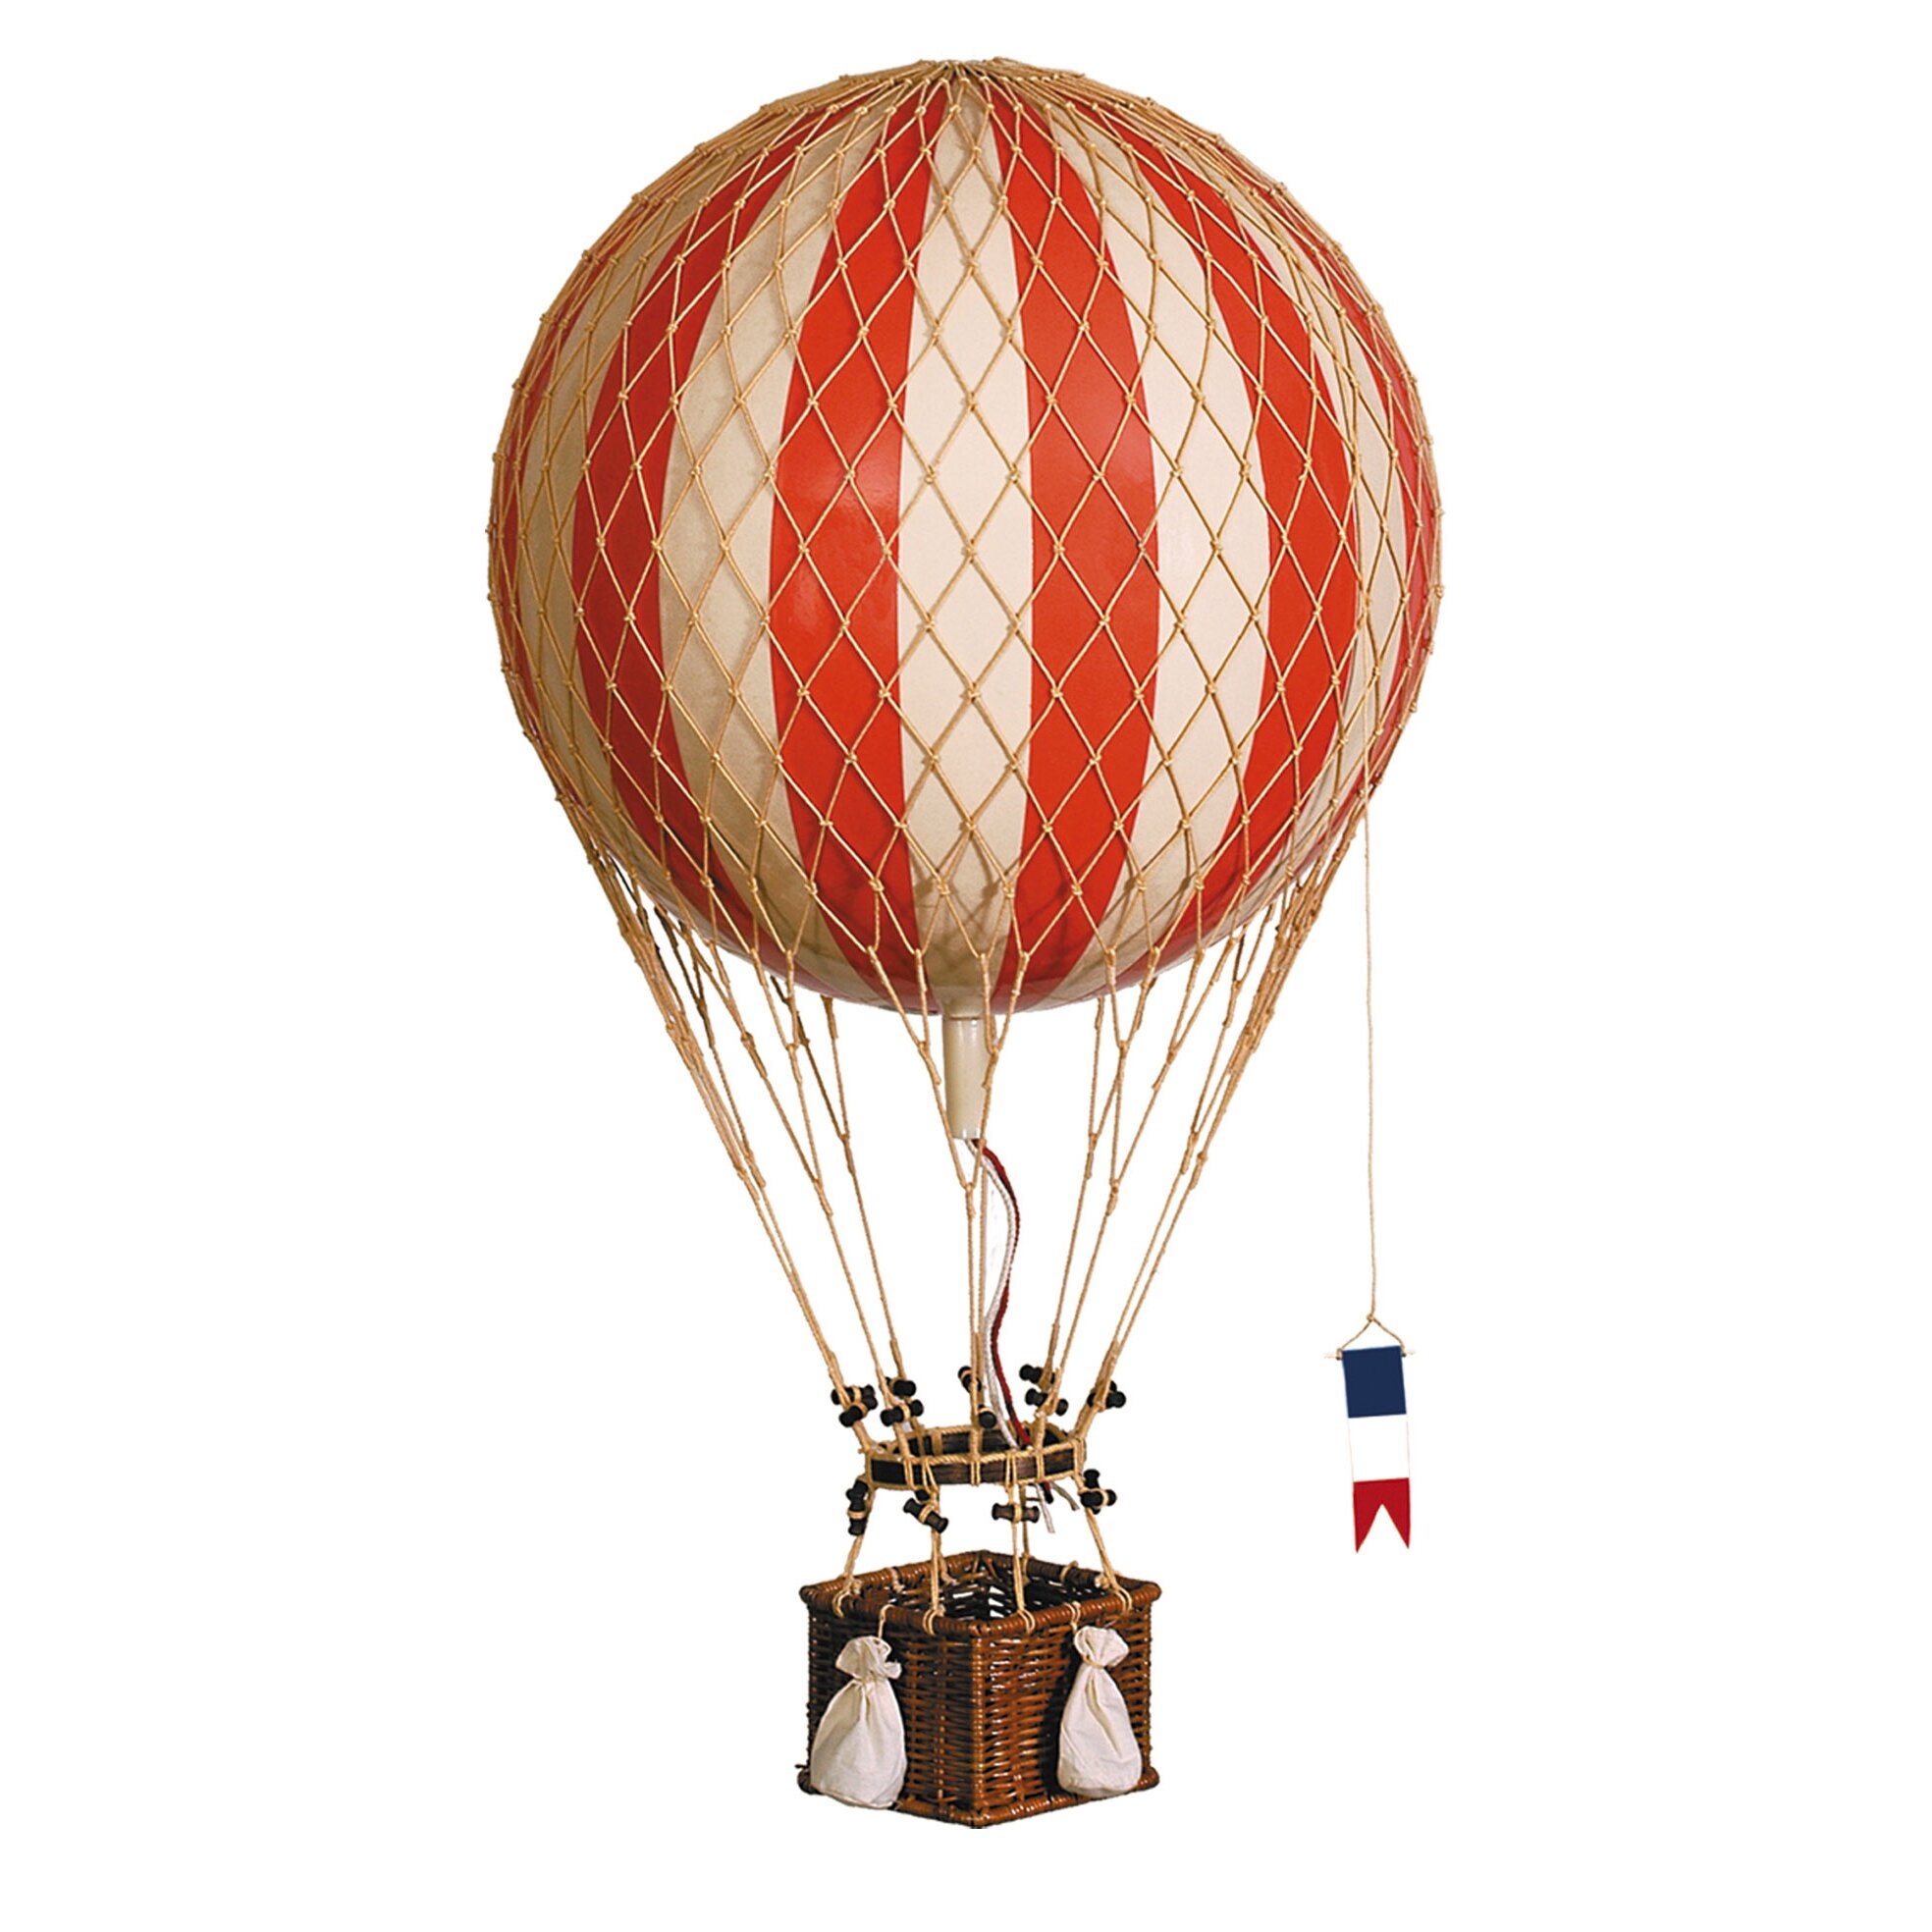 Royal Aero Model Hot Air Balloon